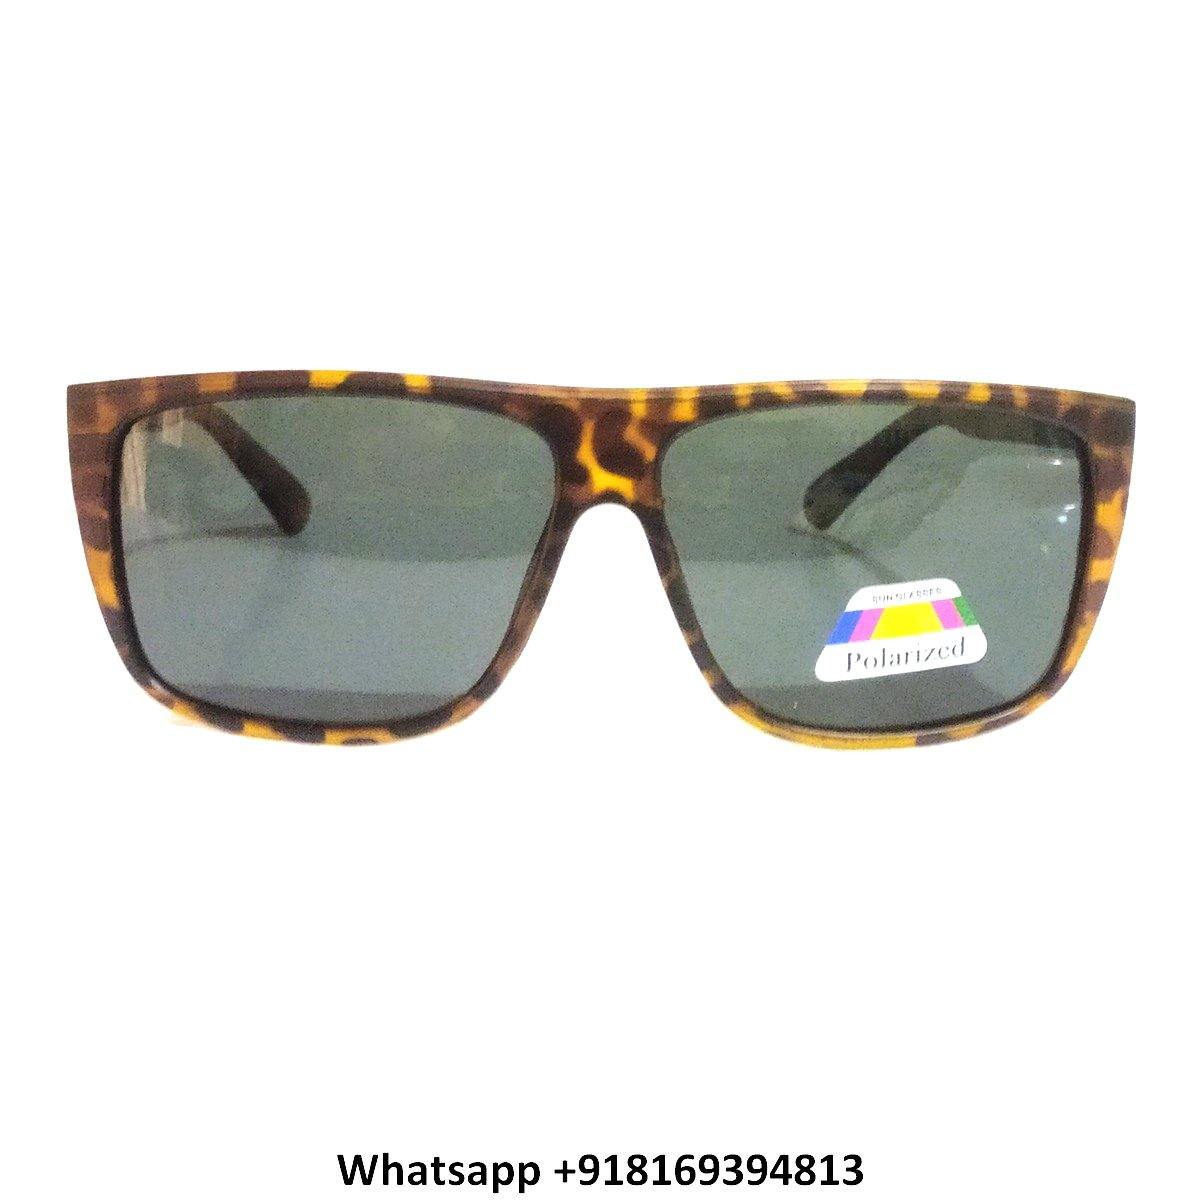 Trendy Square Polarized Sunglasses for Men and Women 2897DA - Glasses India Online